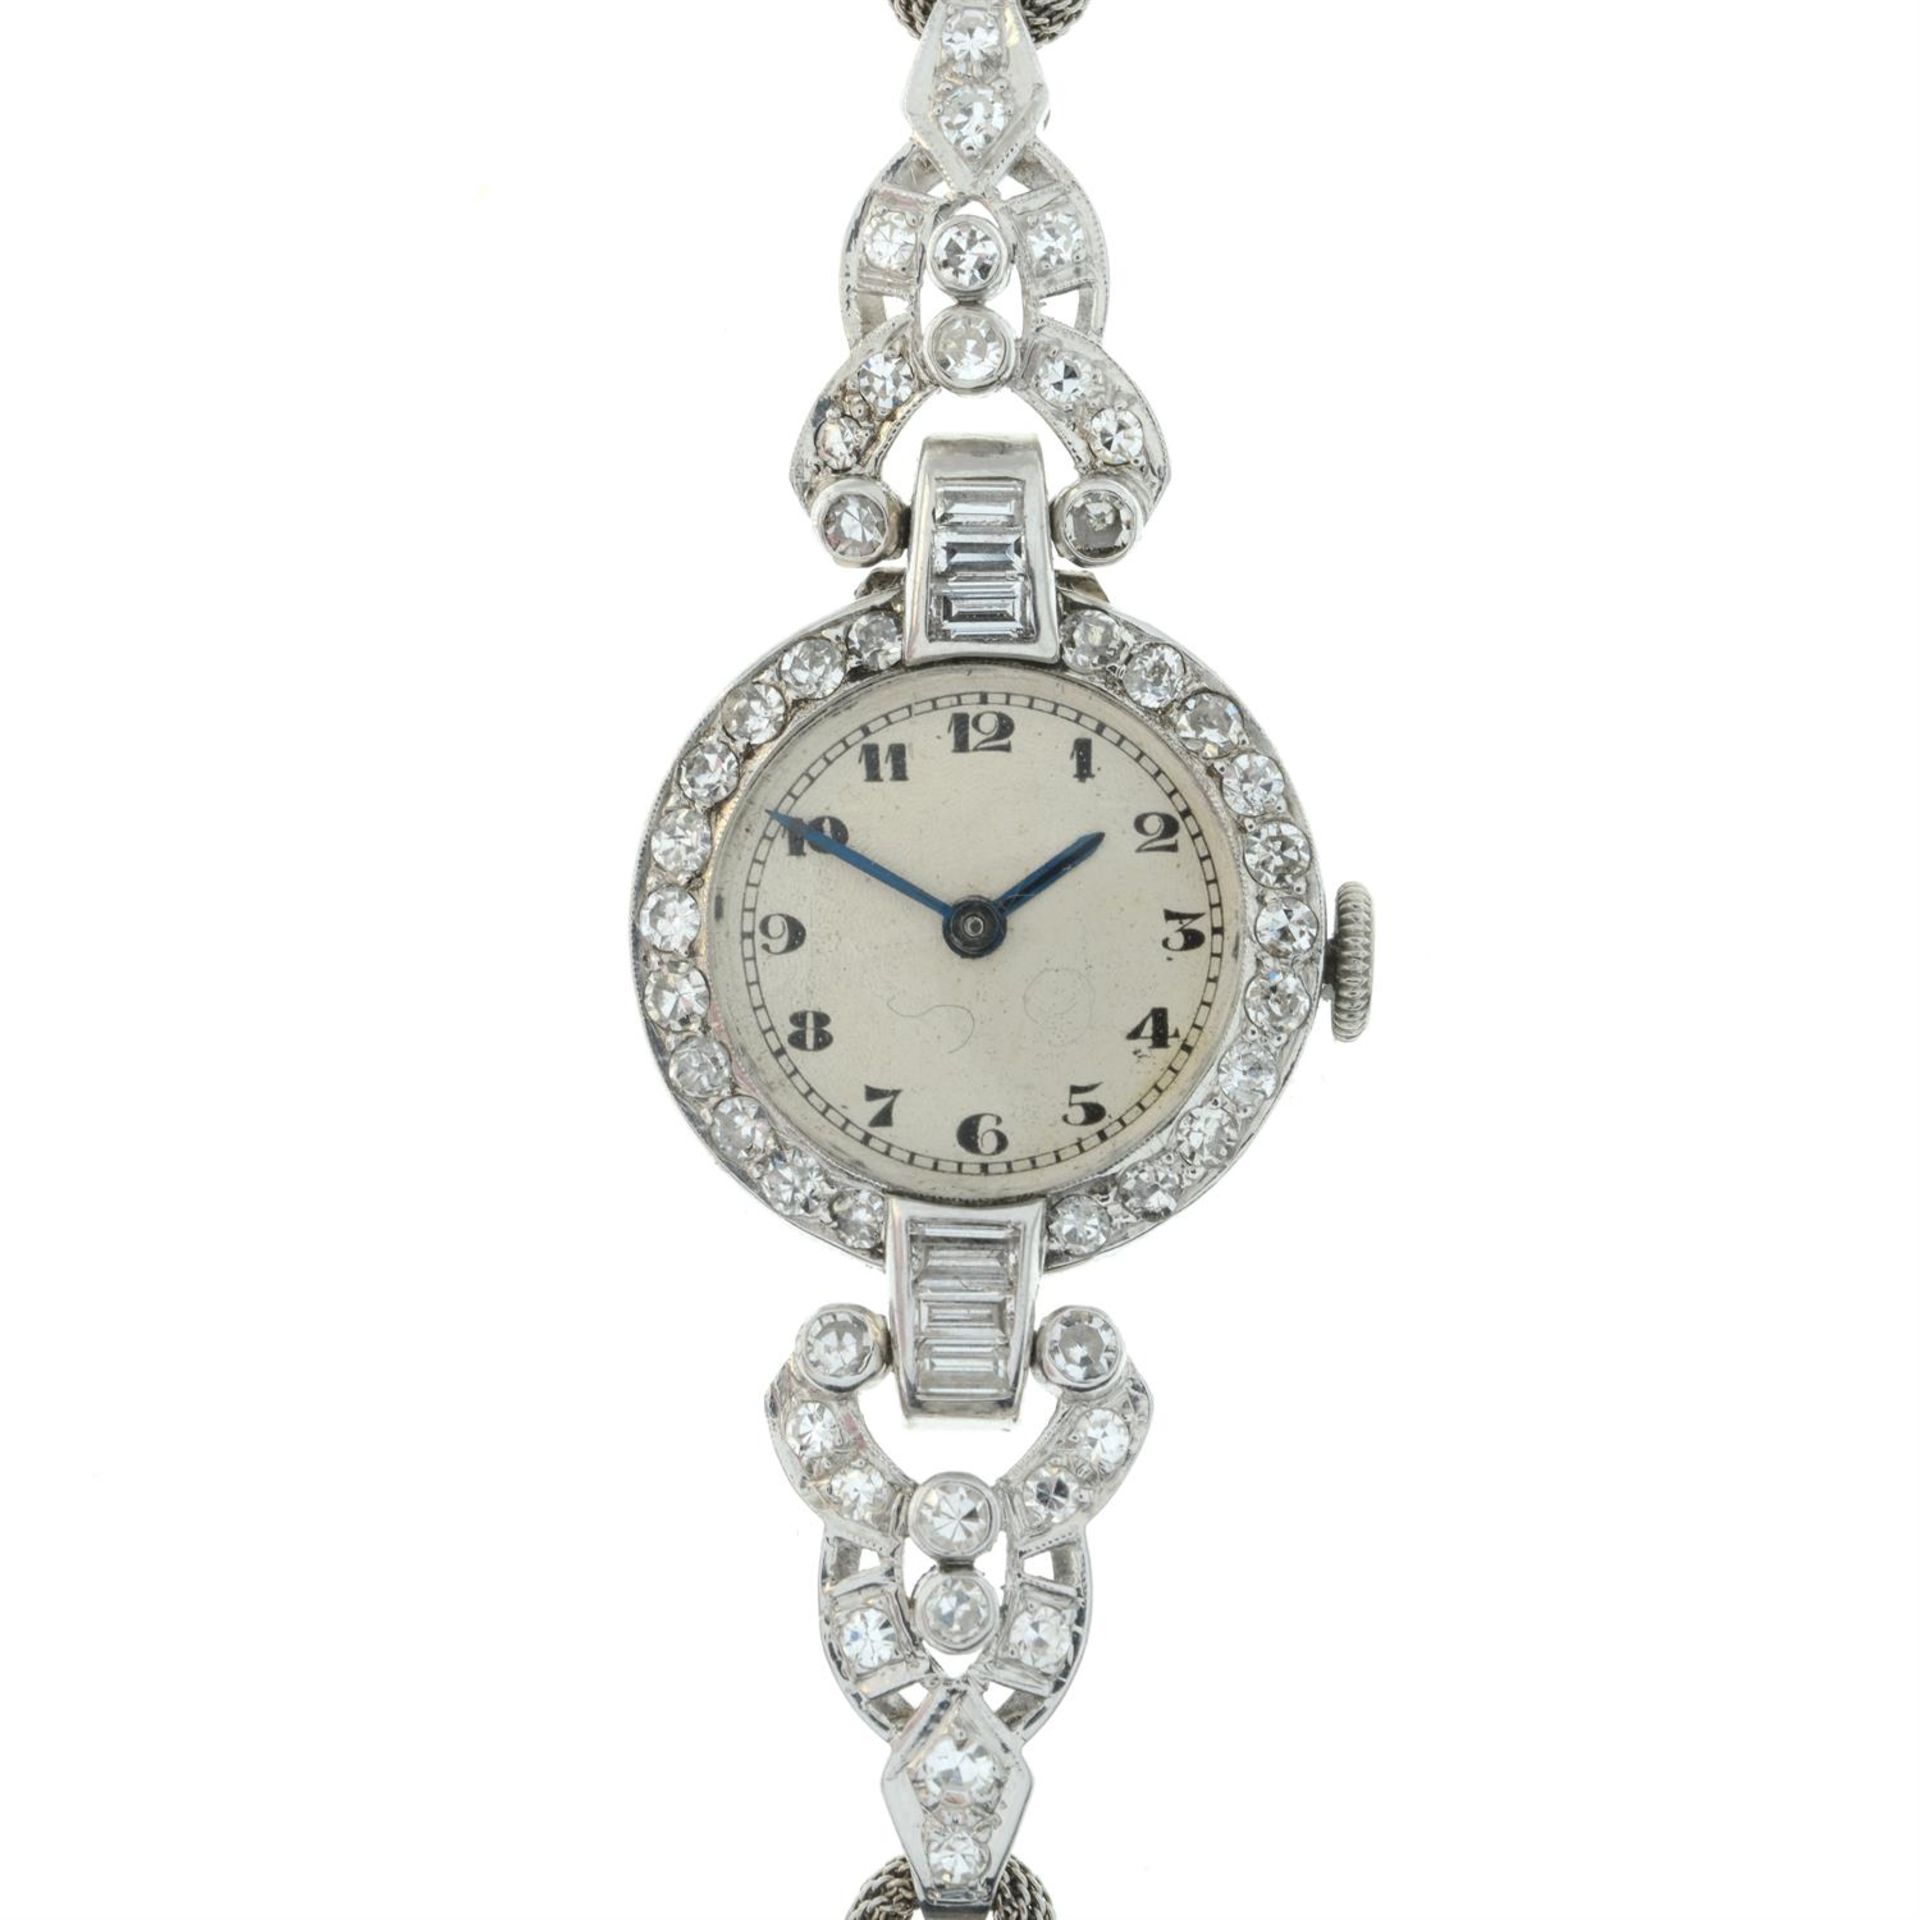 Mid 20th century 9ct gold diamond cocktail watch